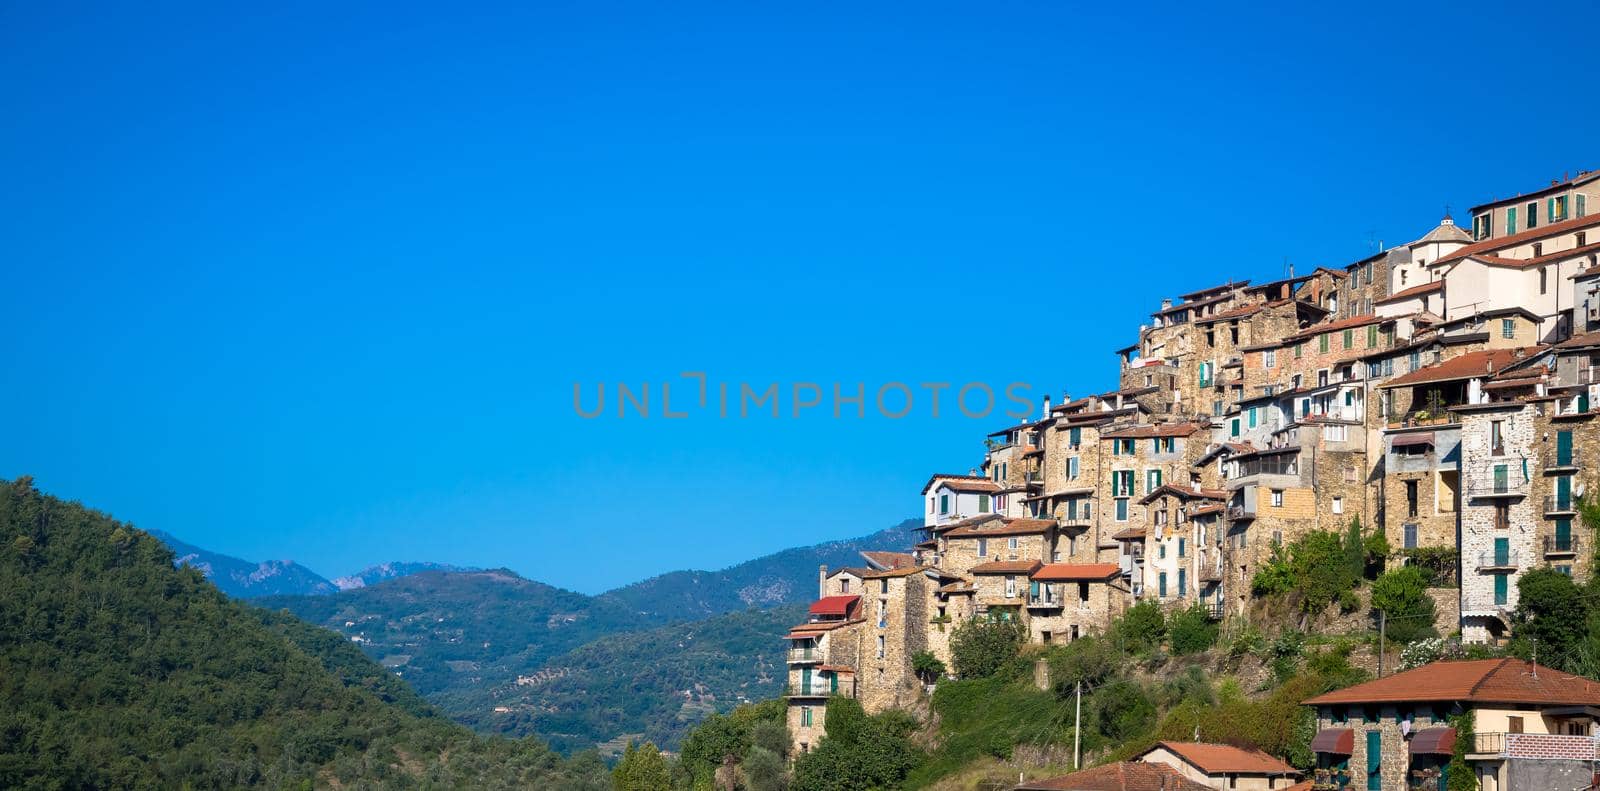 Apricale - Italian old village in Liguria region by Perseomedusa